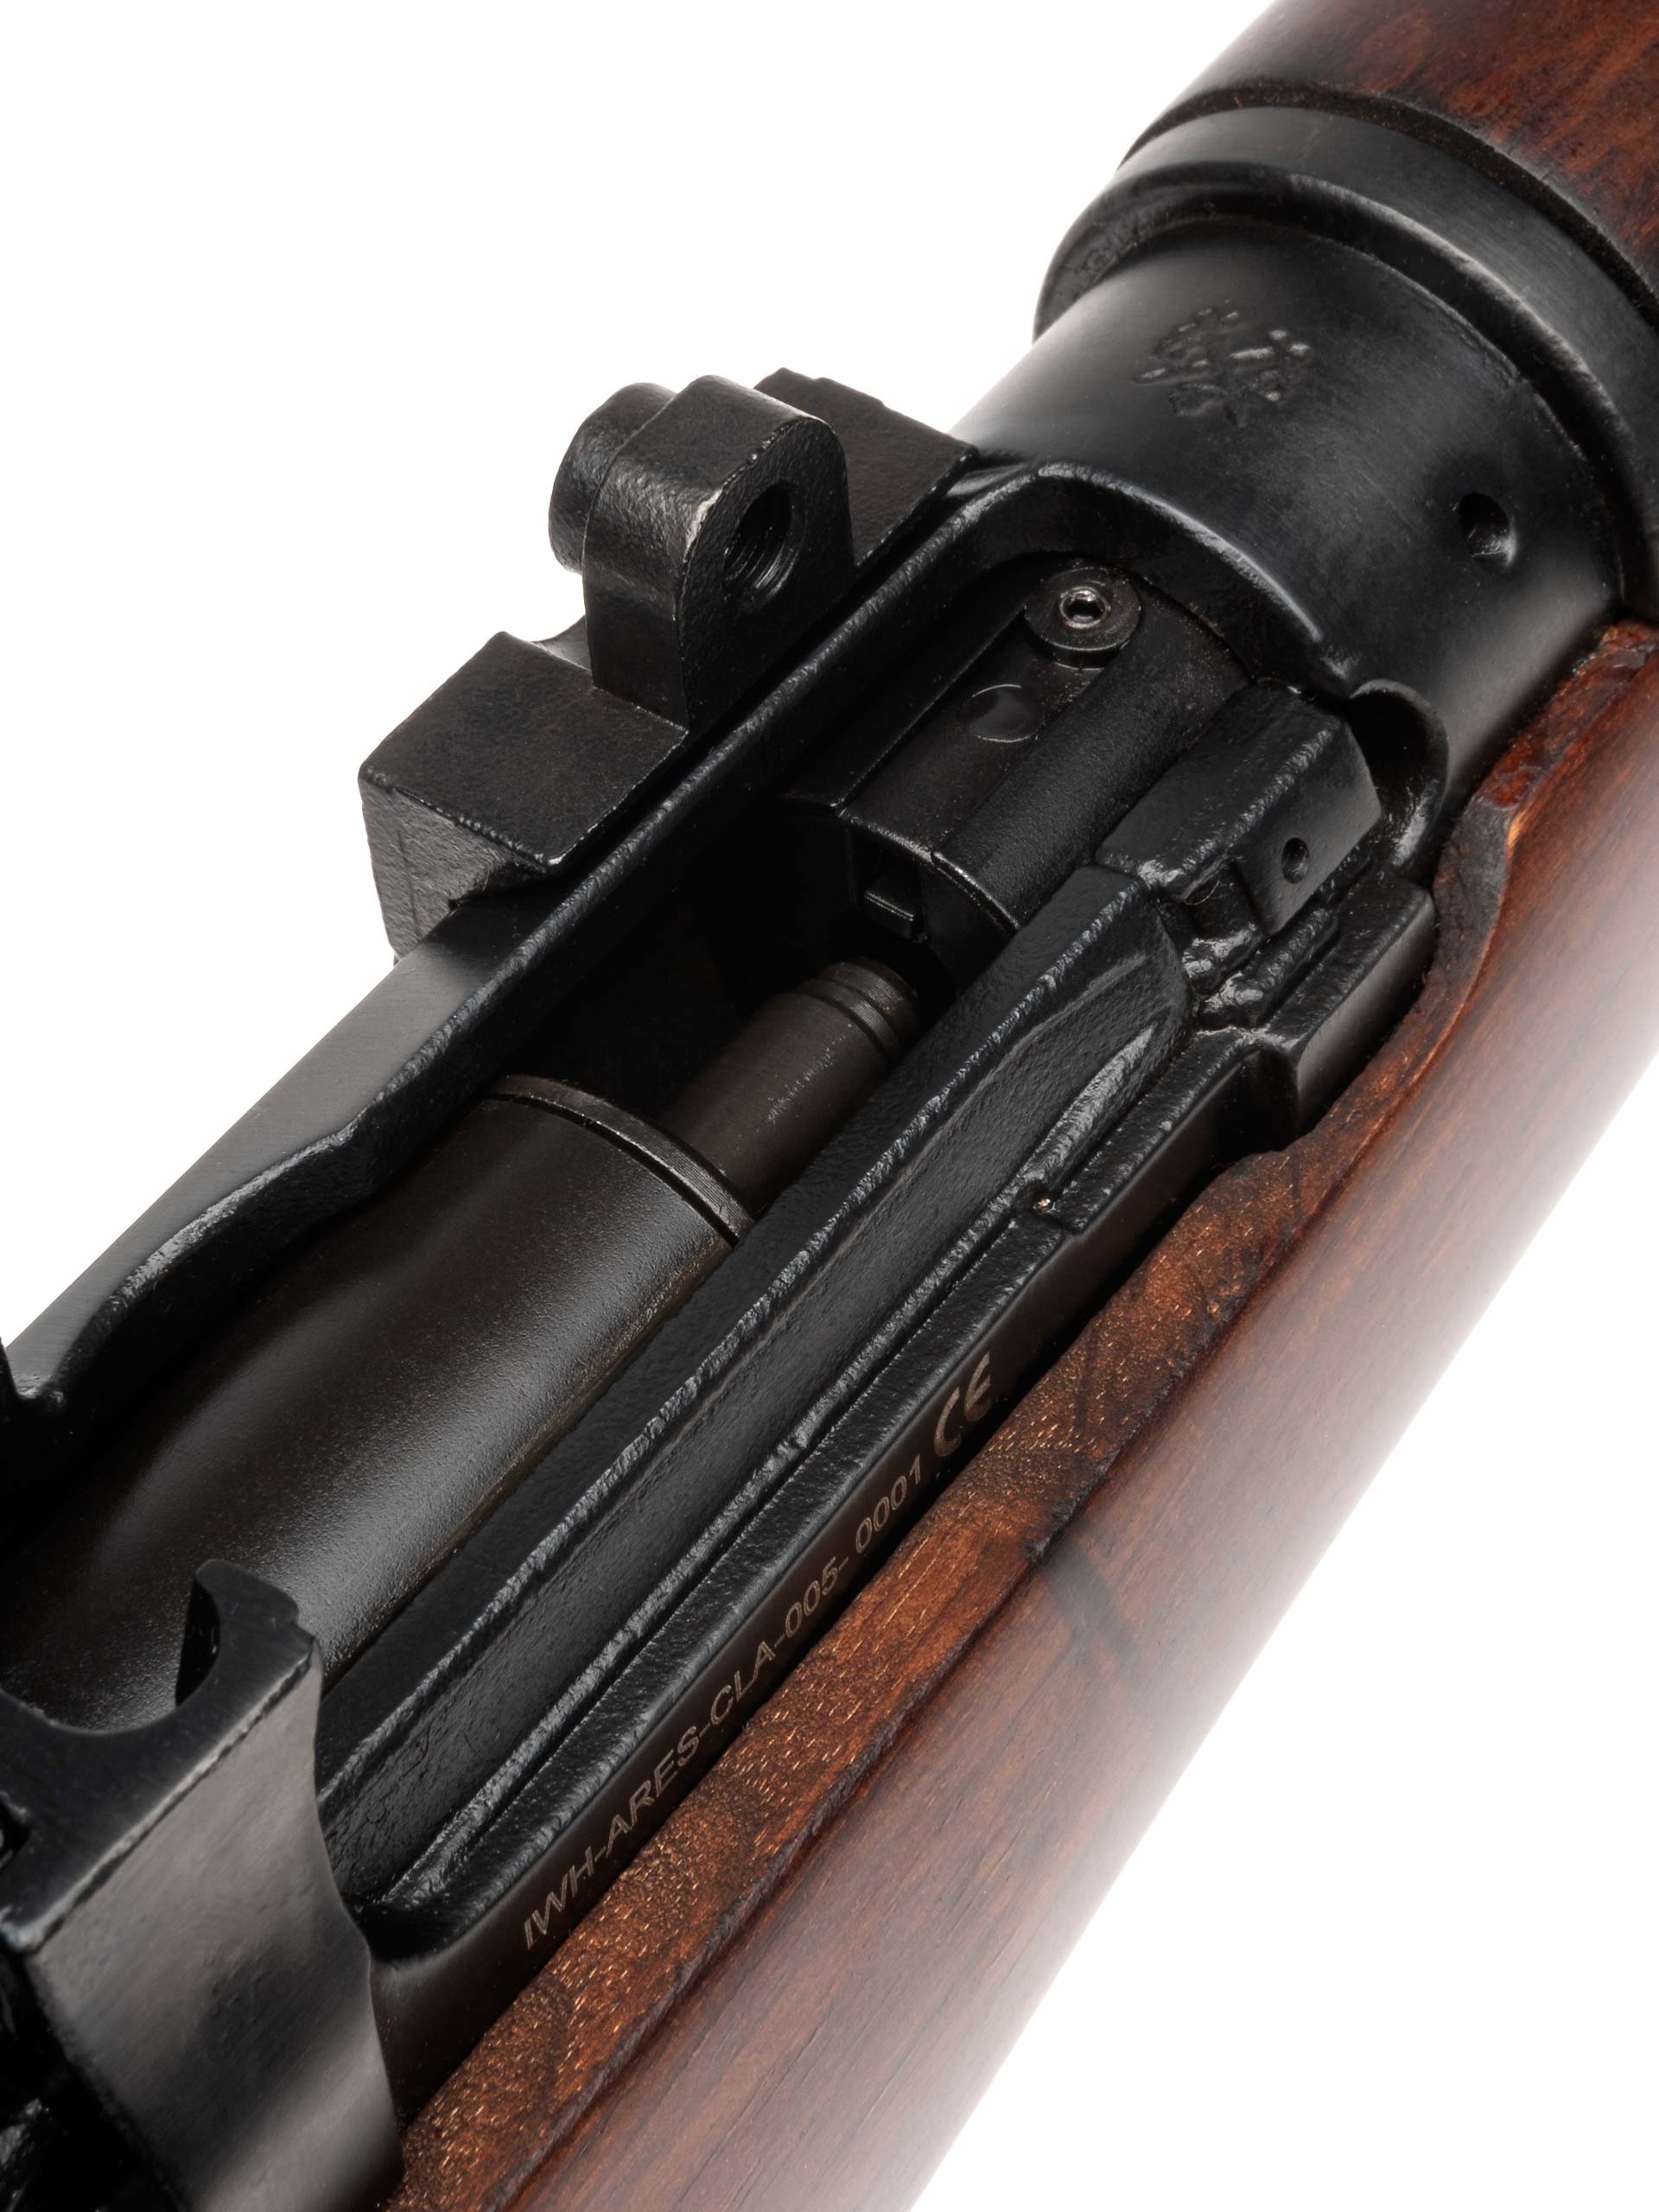 Lee Enfield No.4 Rifle Replica - shop Gunfire